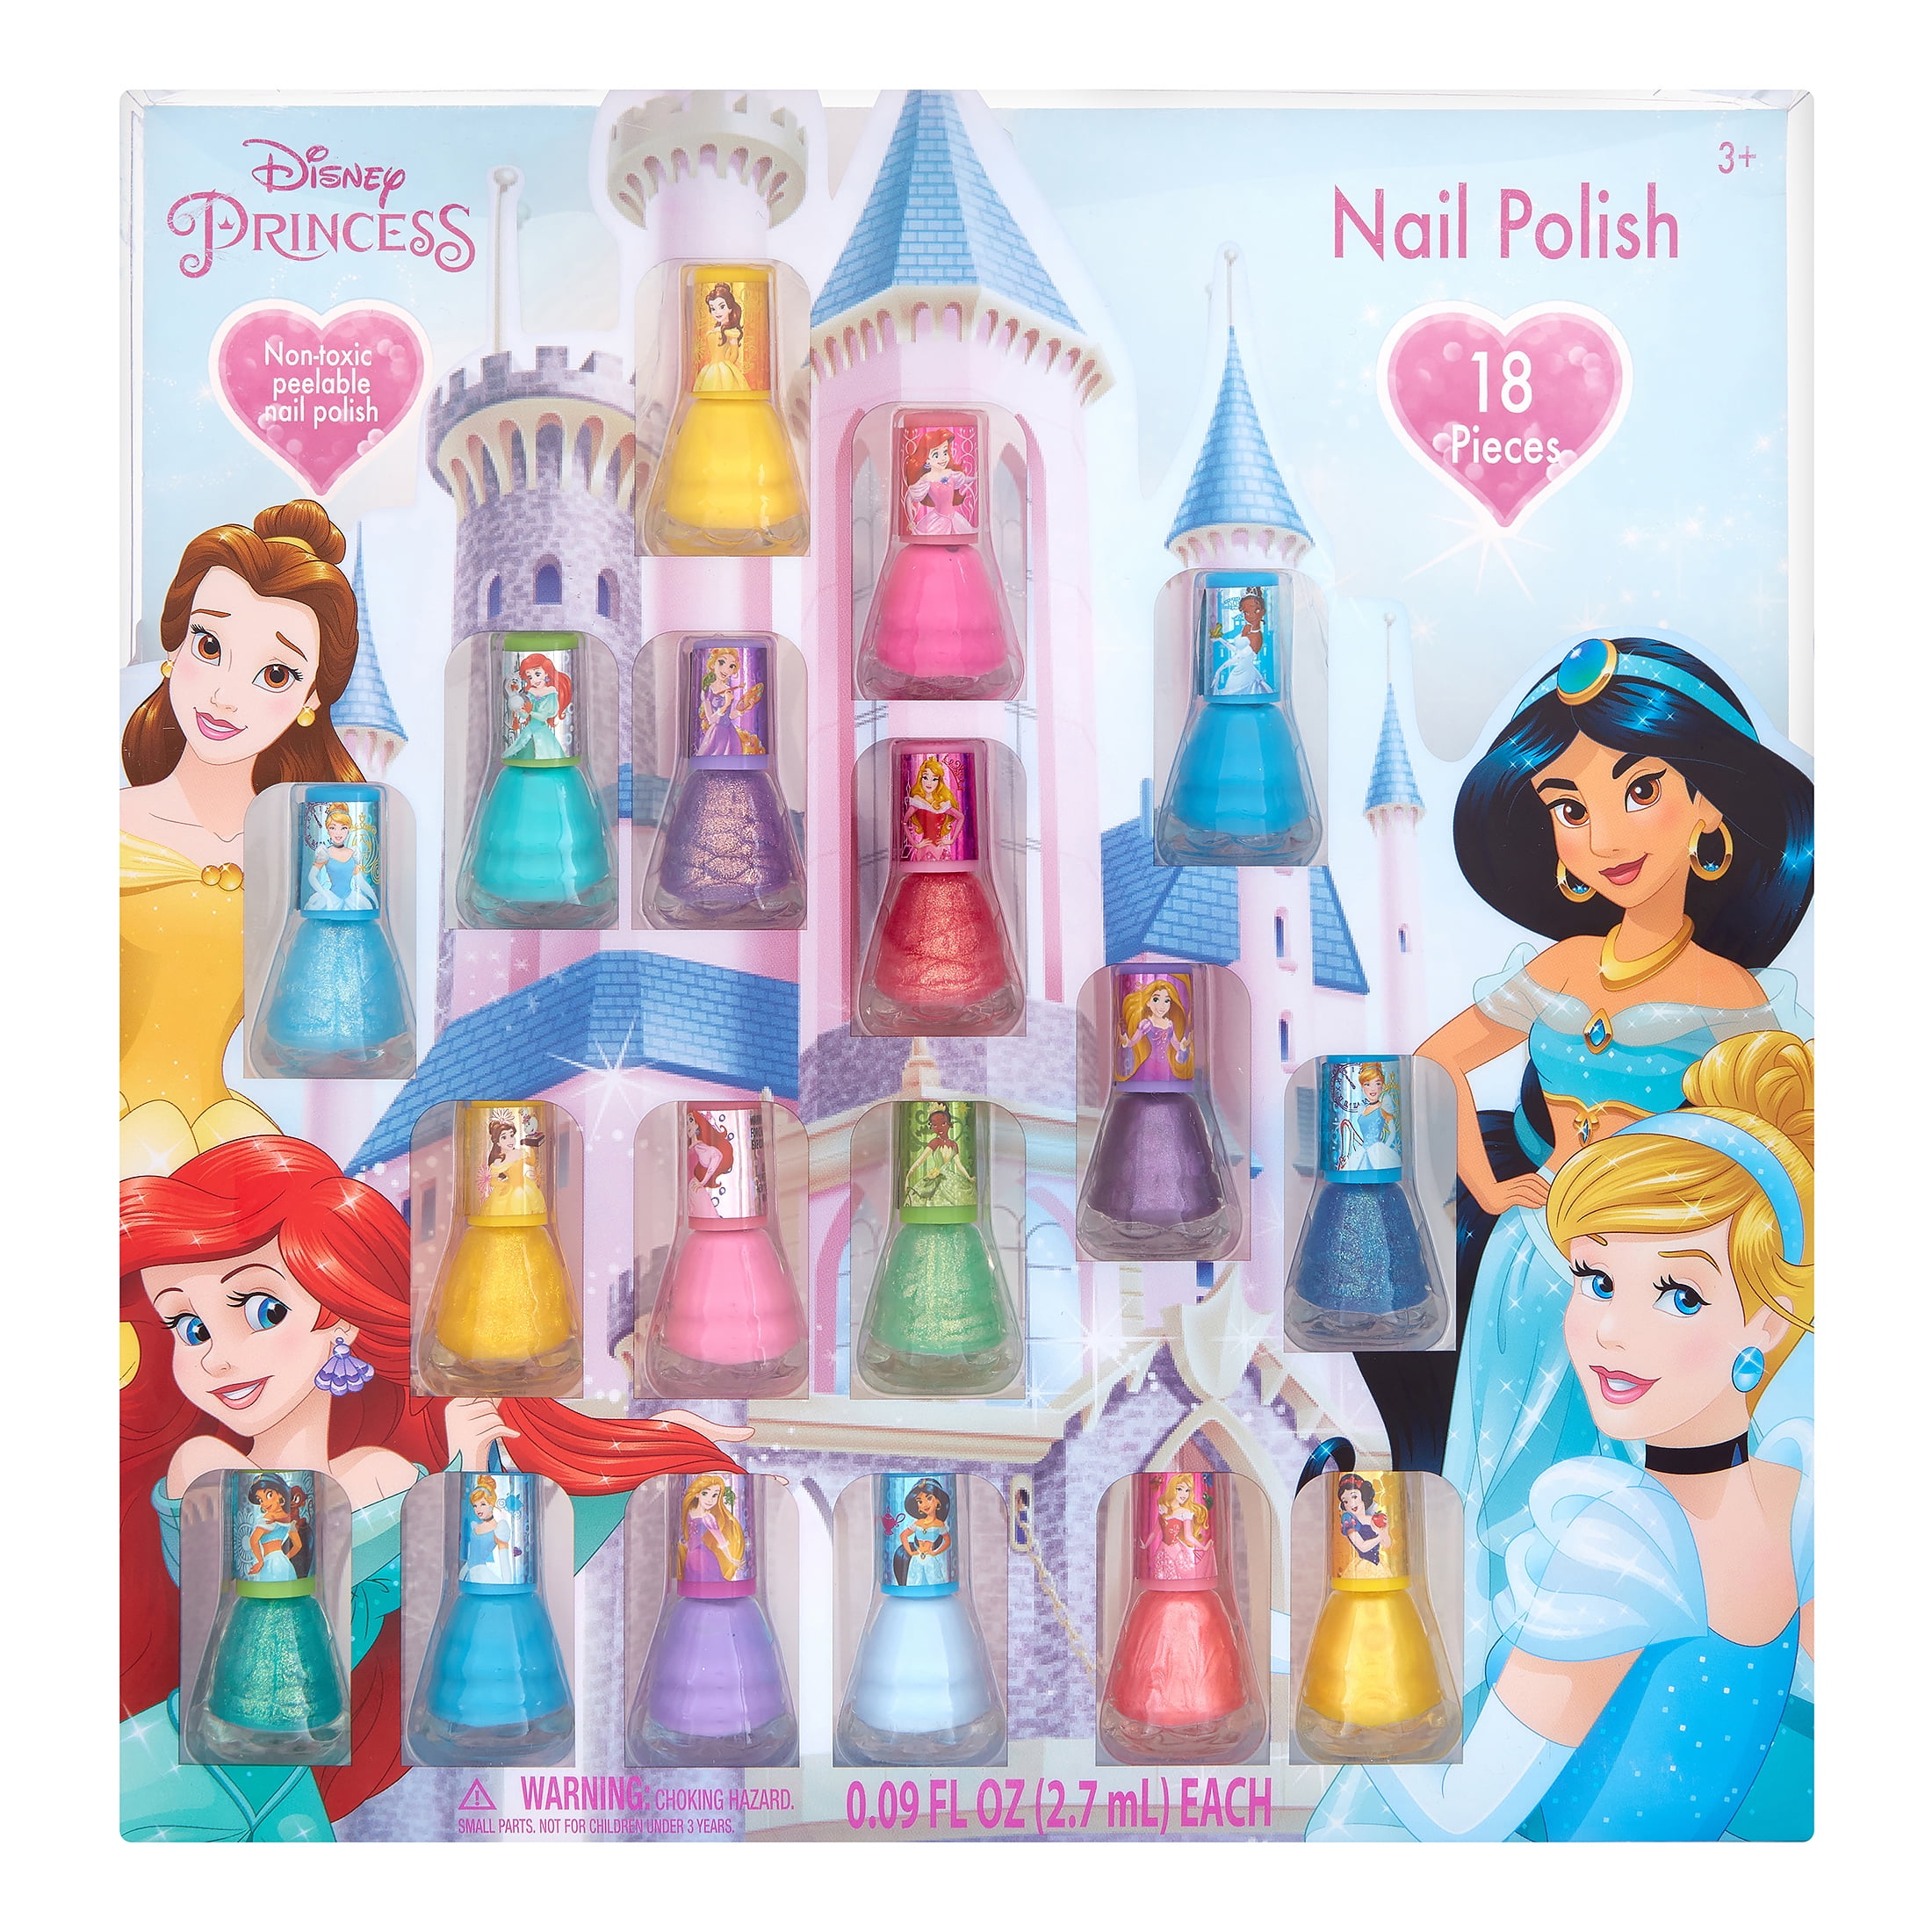 Disney Princess Nail Polish Gift Set (PeelOff), 18 Pieces